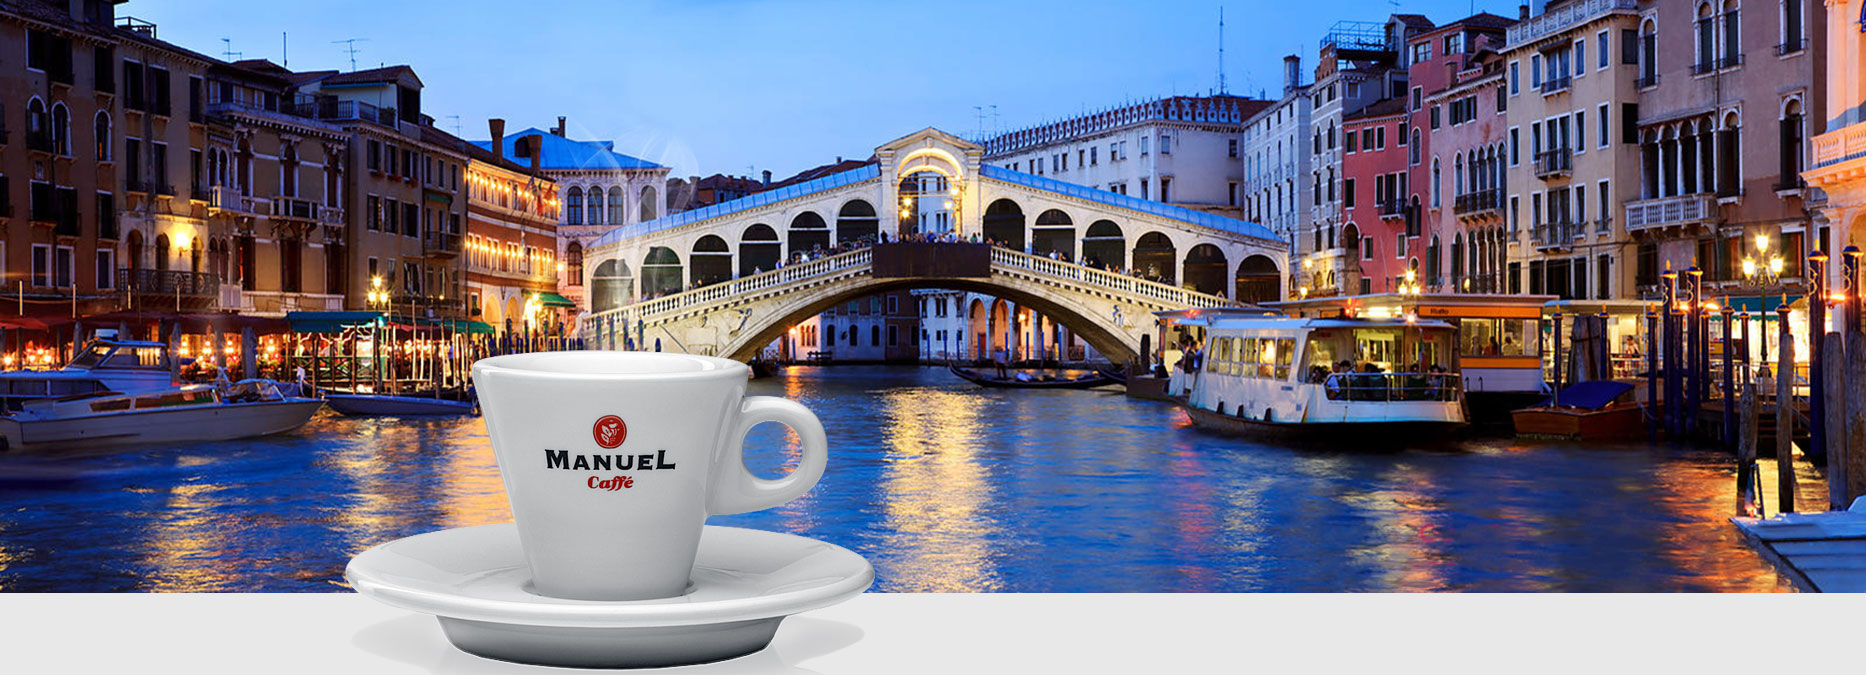 Manuel Caffe - Premium Italian Coffee